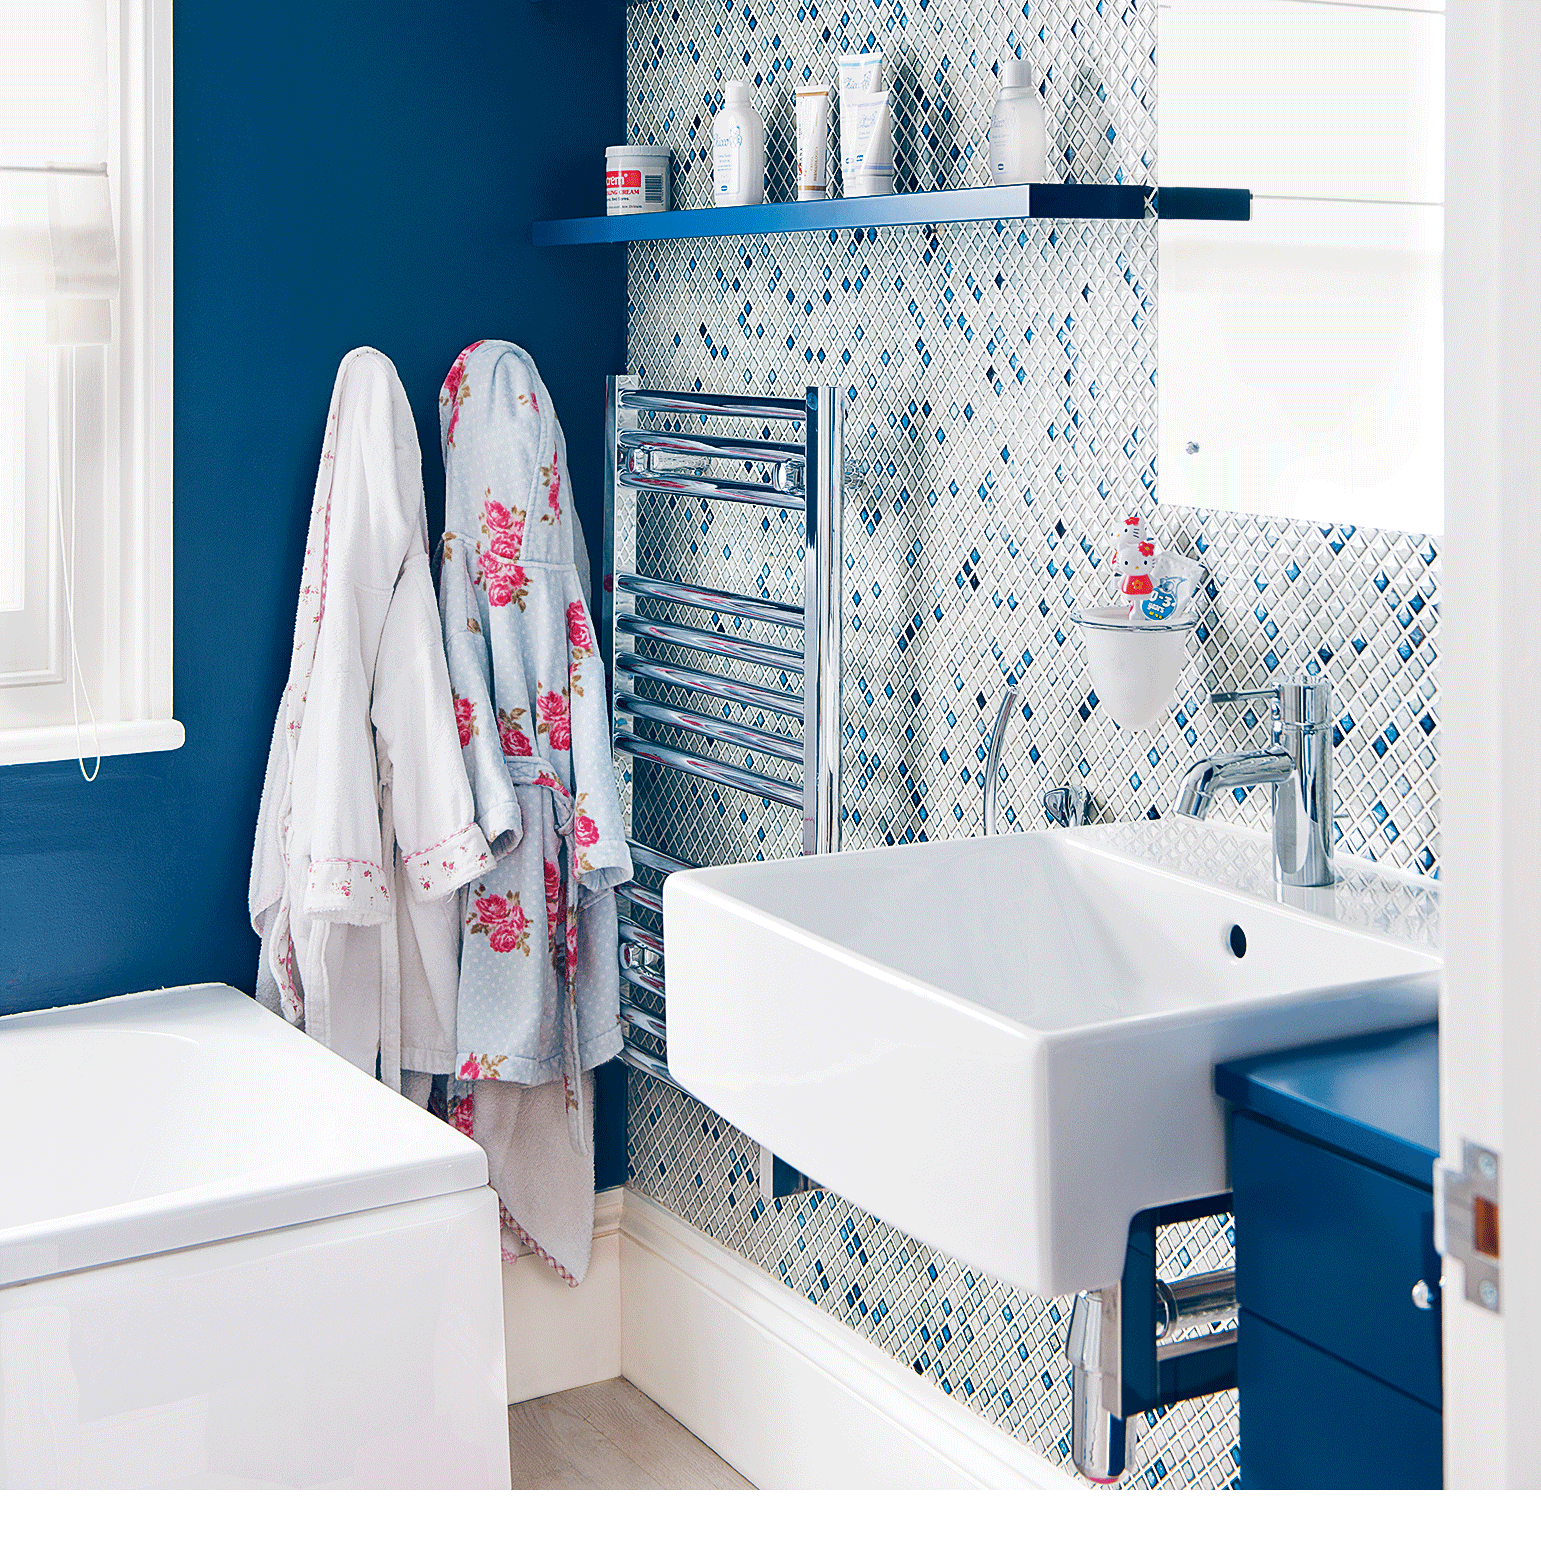 Blue and white bathroom | Bathroom design | Mosaic tiles | Image | Housetohome